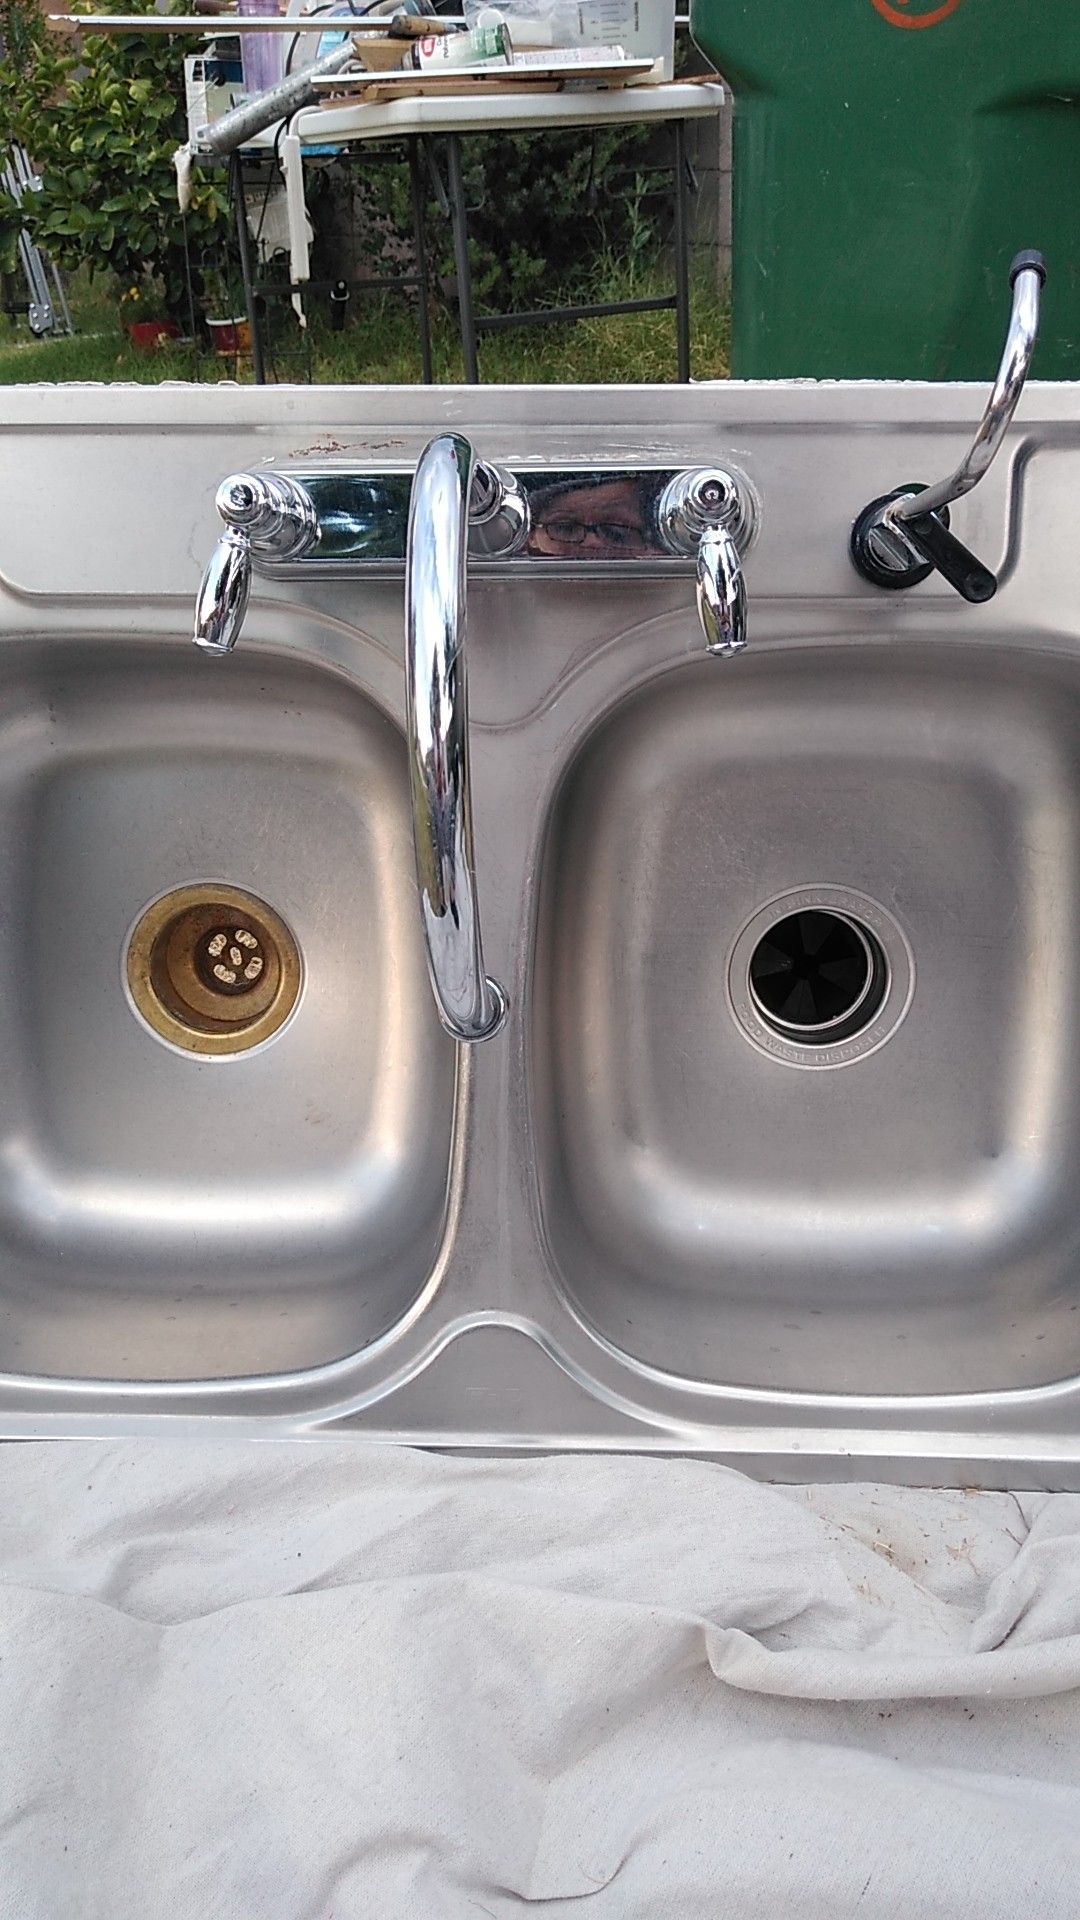 Stainless steel kitchen sink 33" w by 20 1/2 L w. Garage disposal almost new